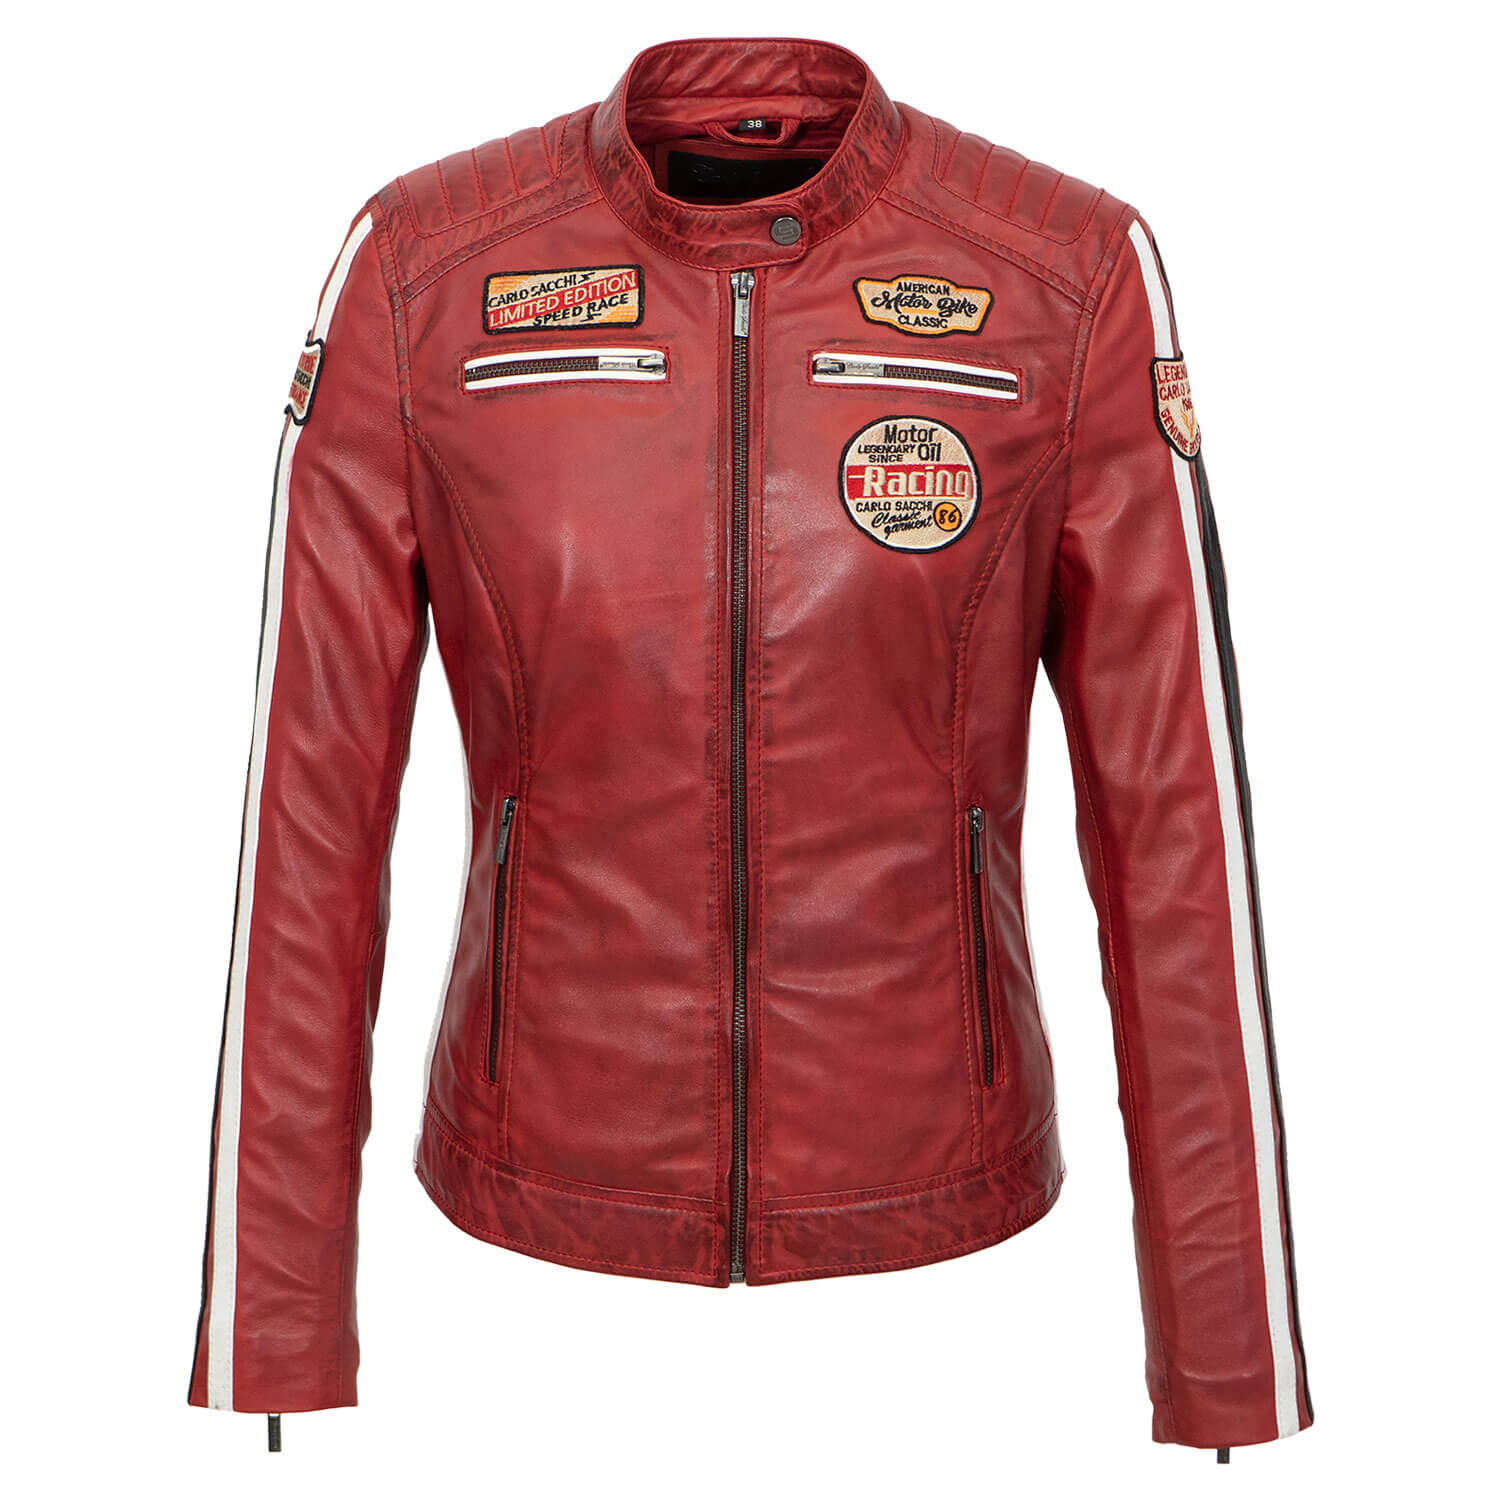 Ladies leather biker jacket red Lady T 24